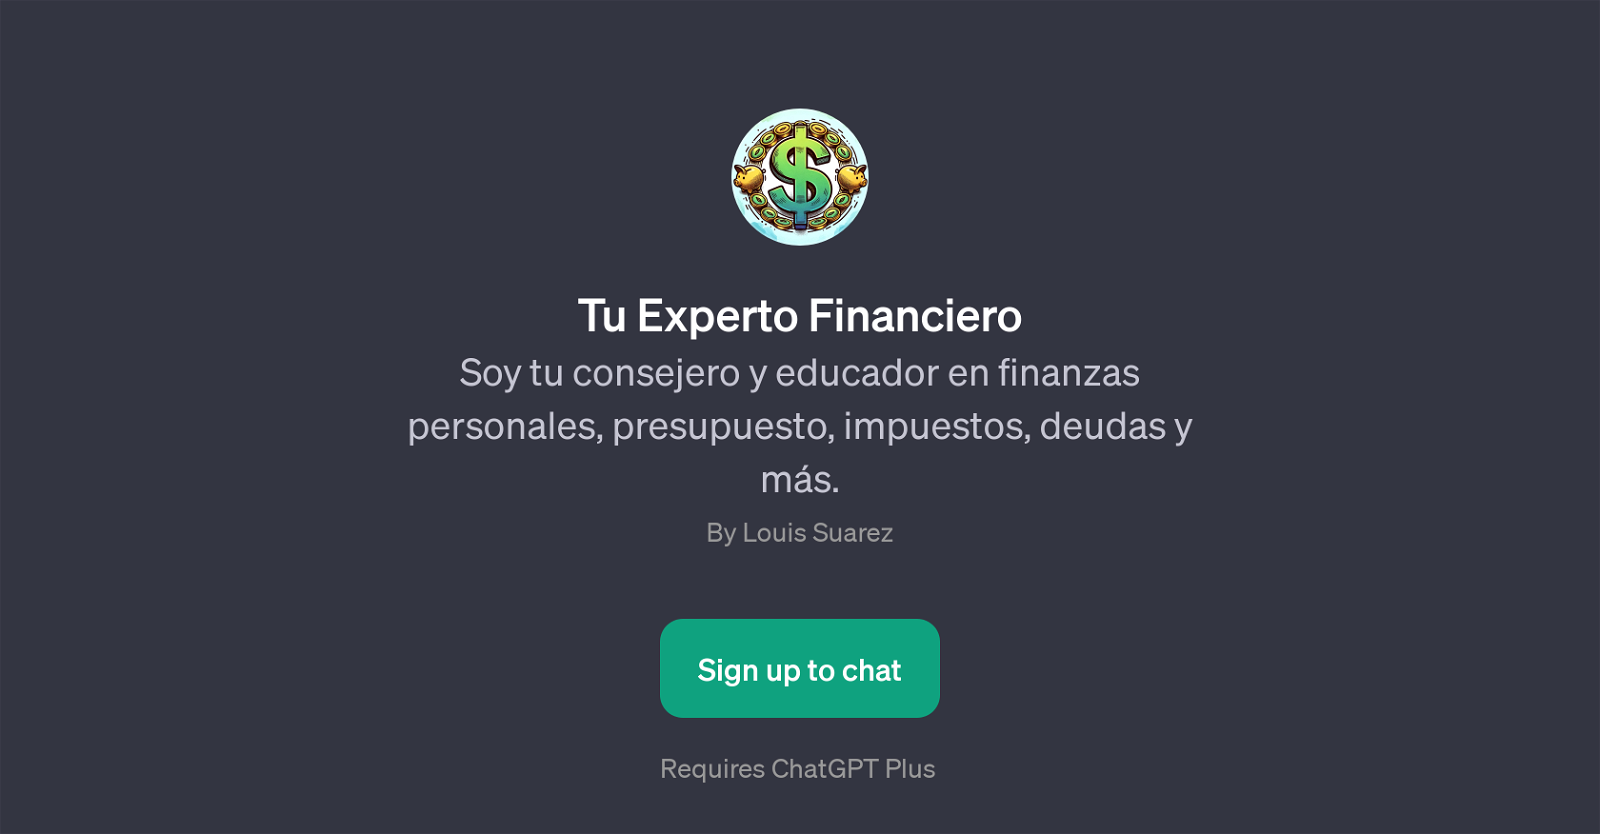 Tu Experto Financiero website